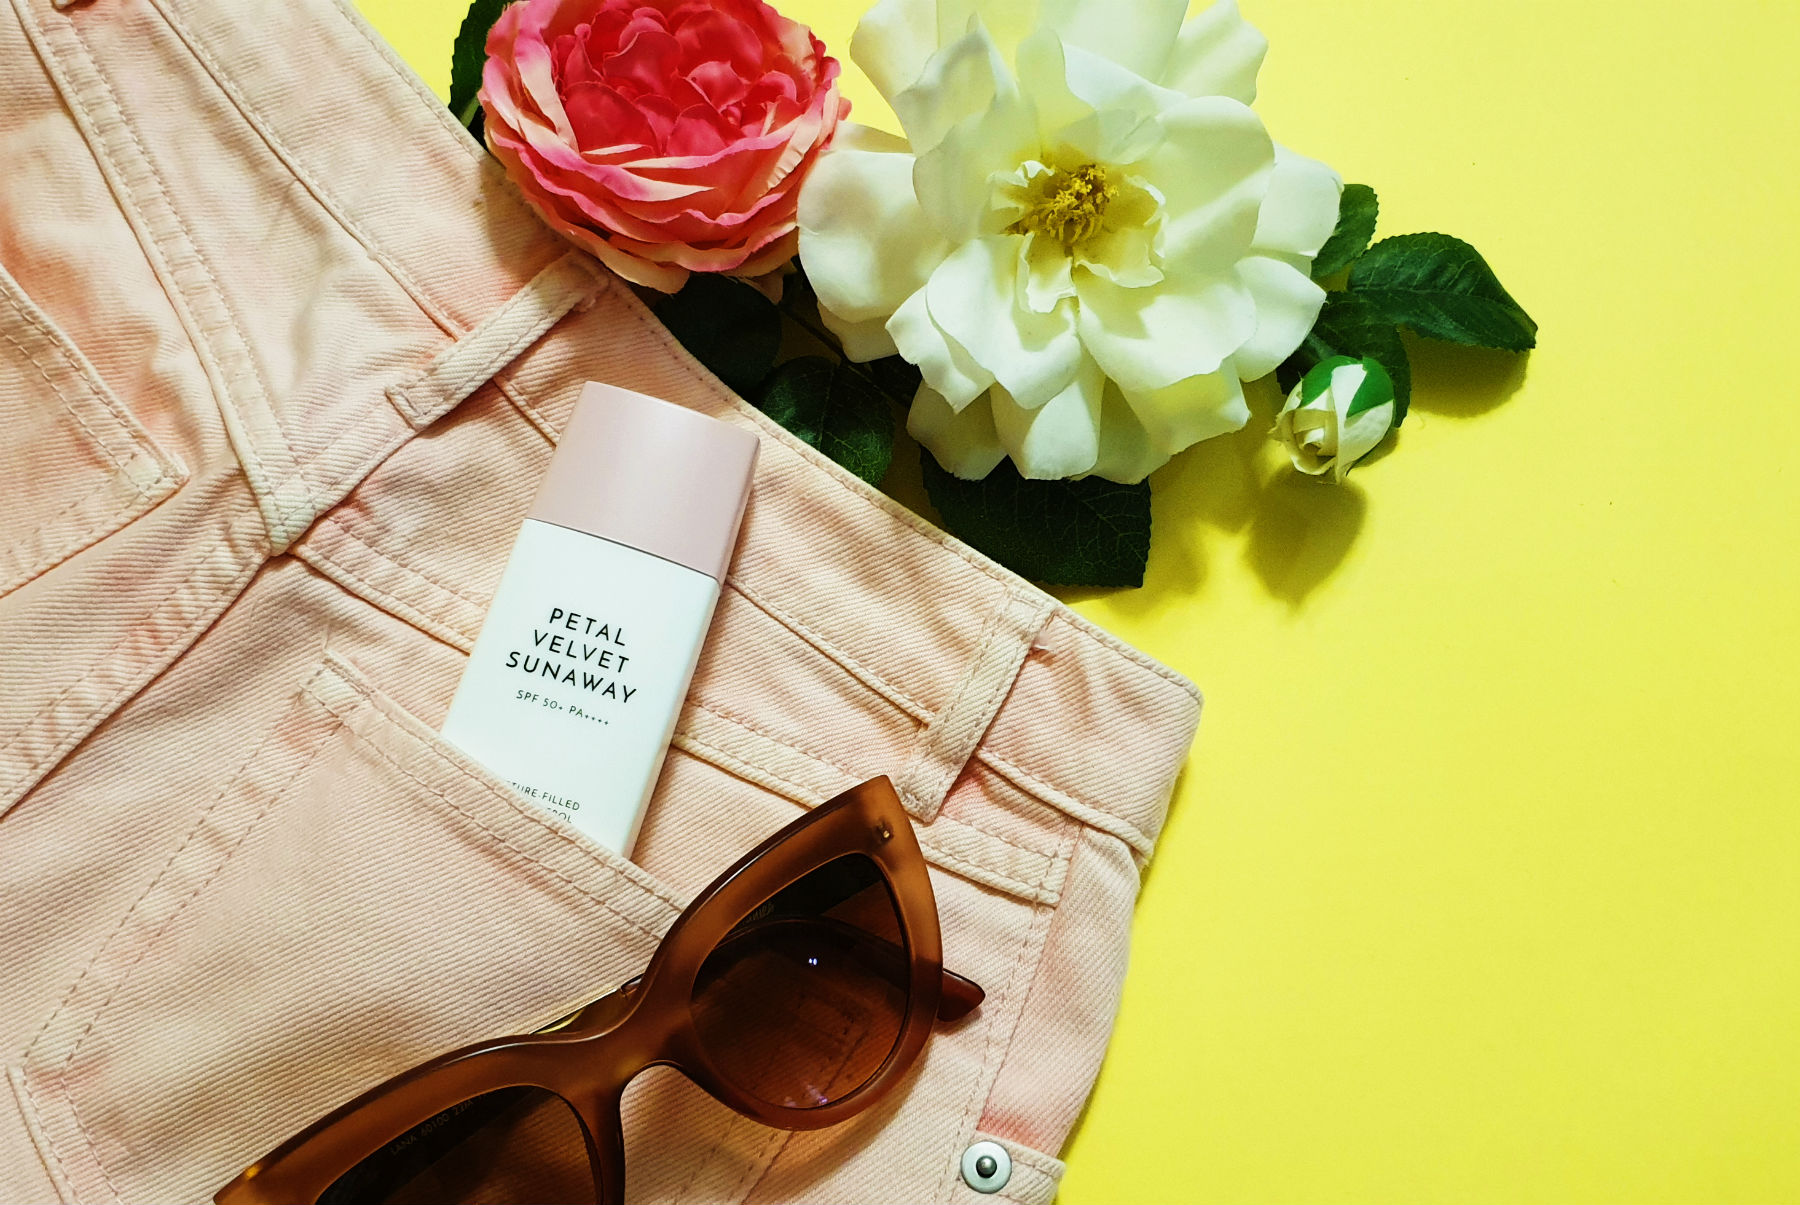 althea petal velvet sunaway review | style vanity